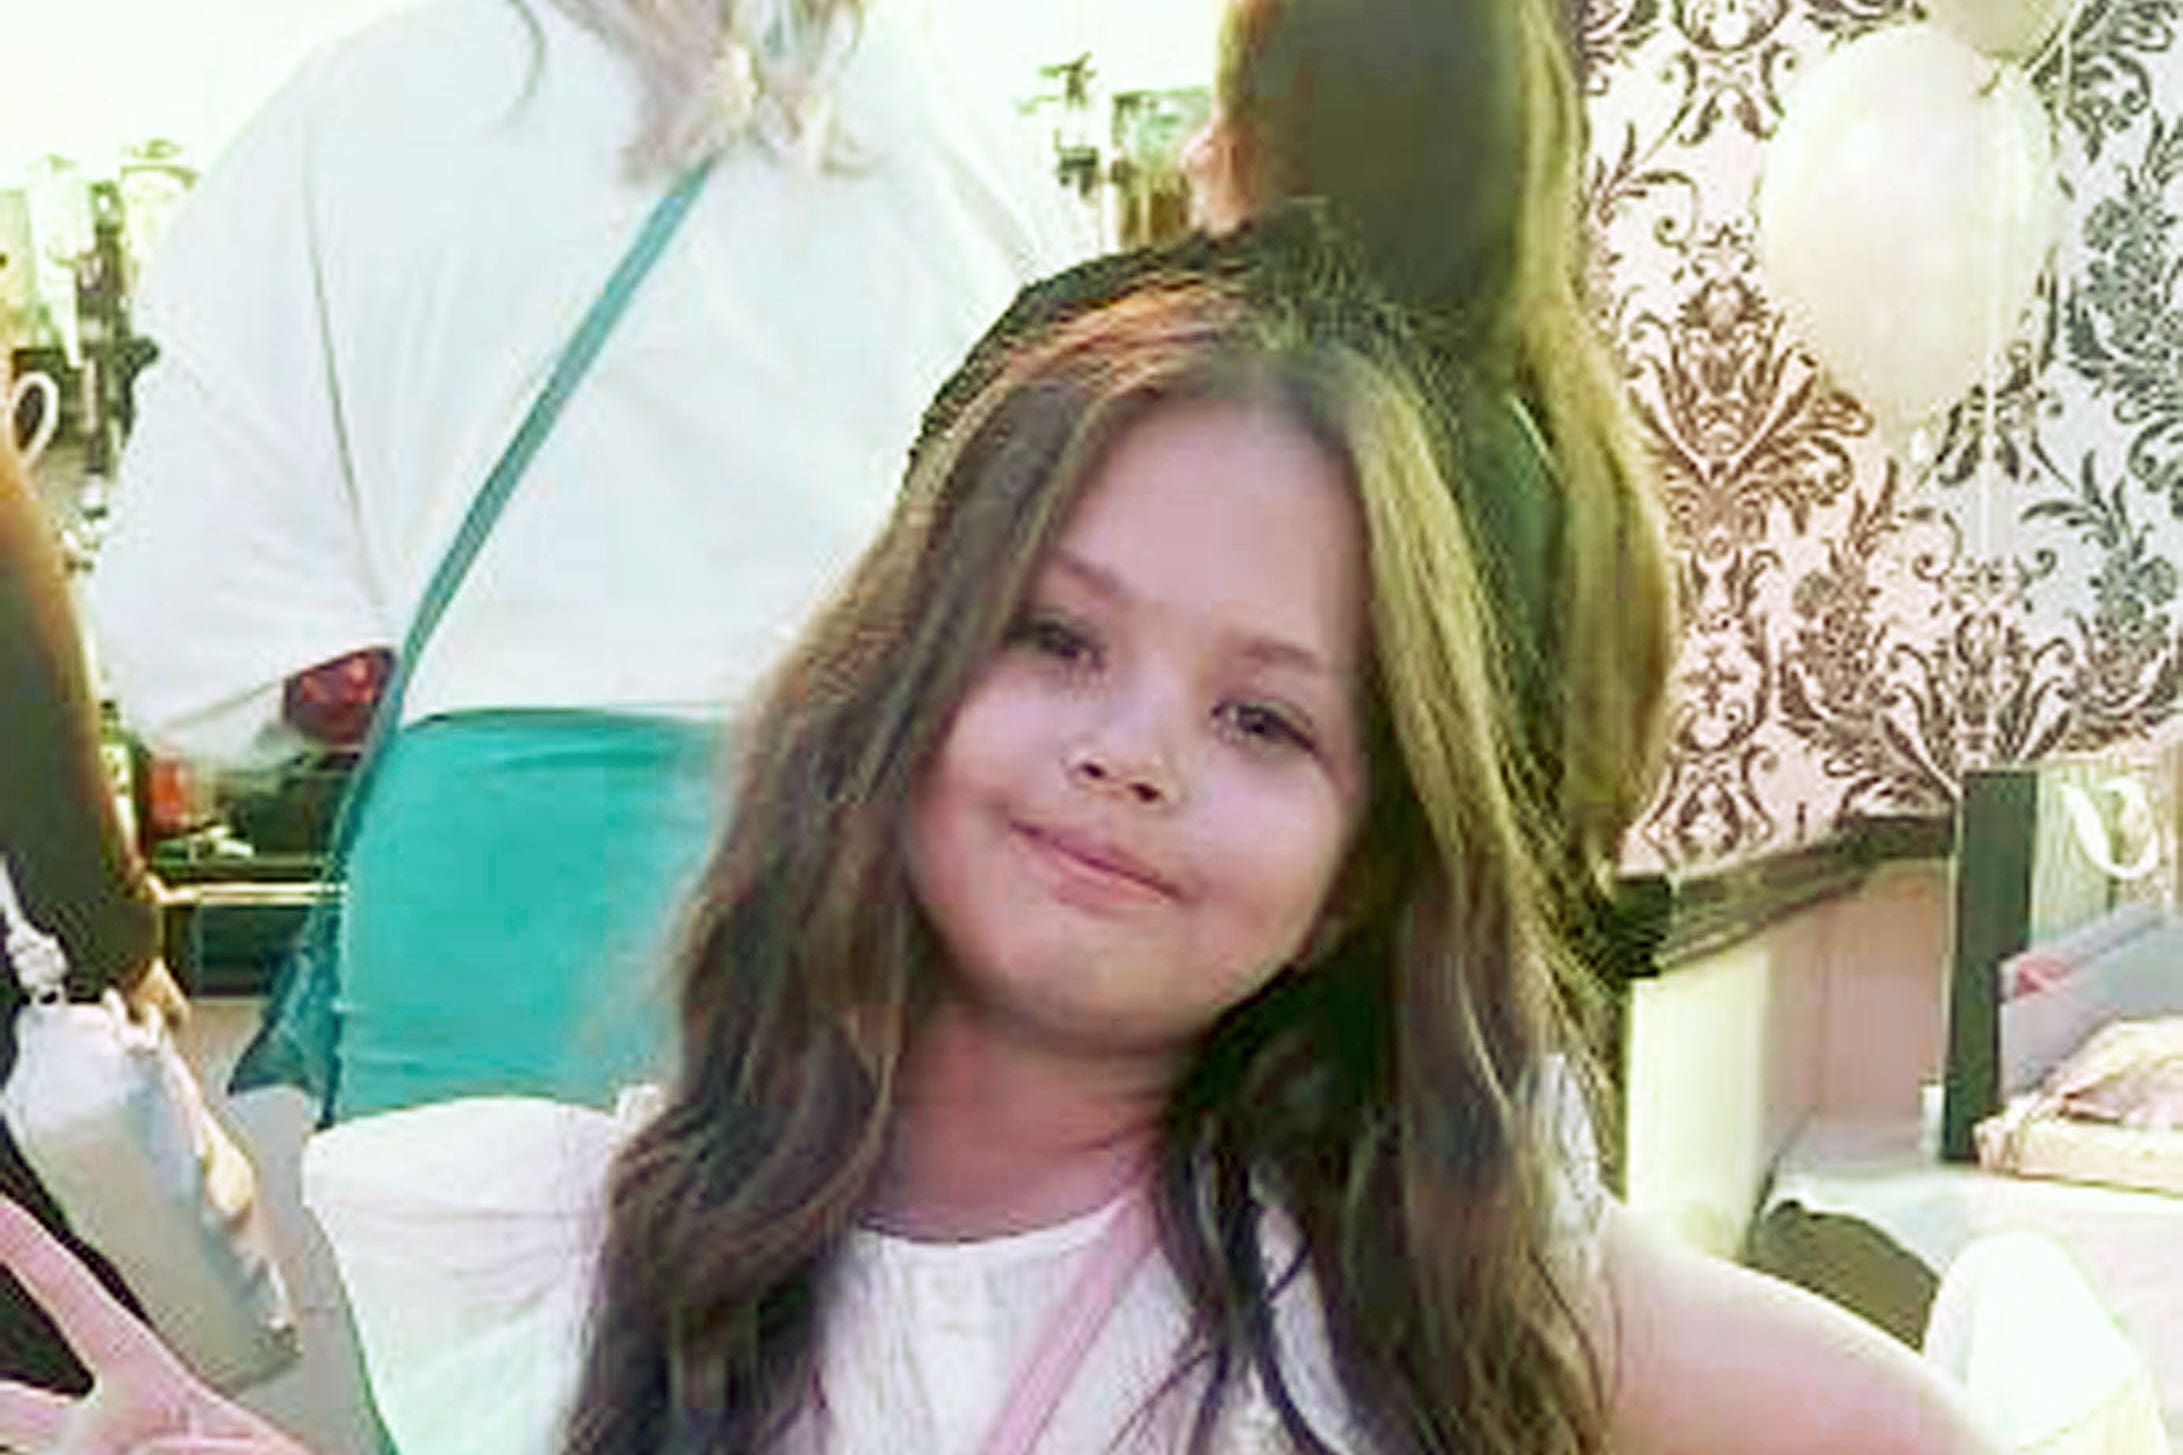 Nine-year-old Olivia Pratt-Korbel was shot at her home in Liverpool